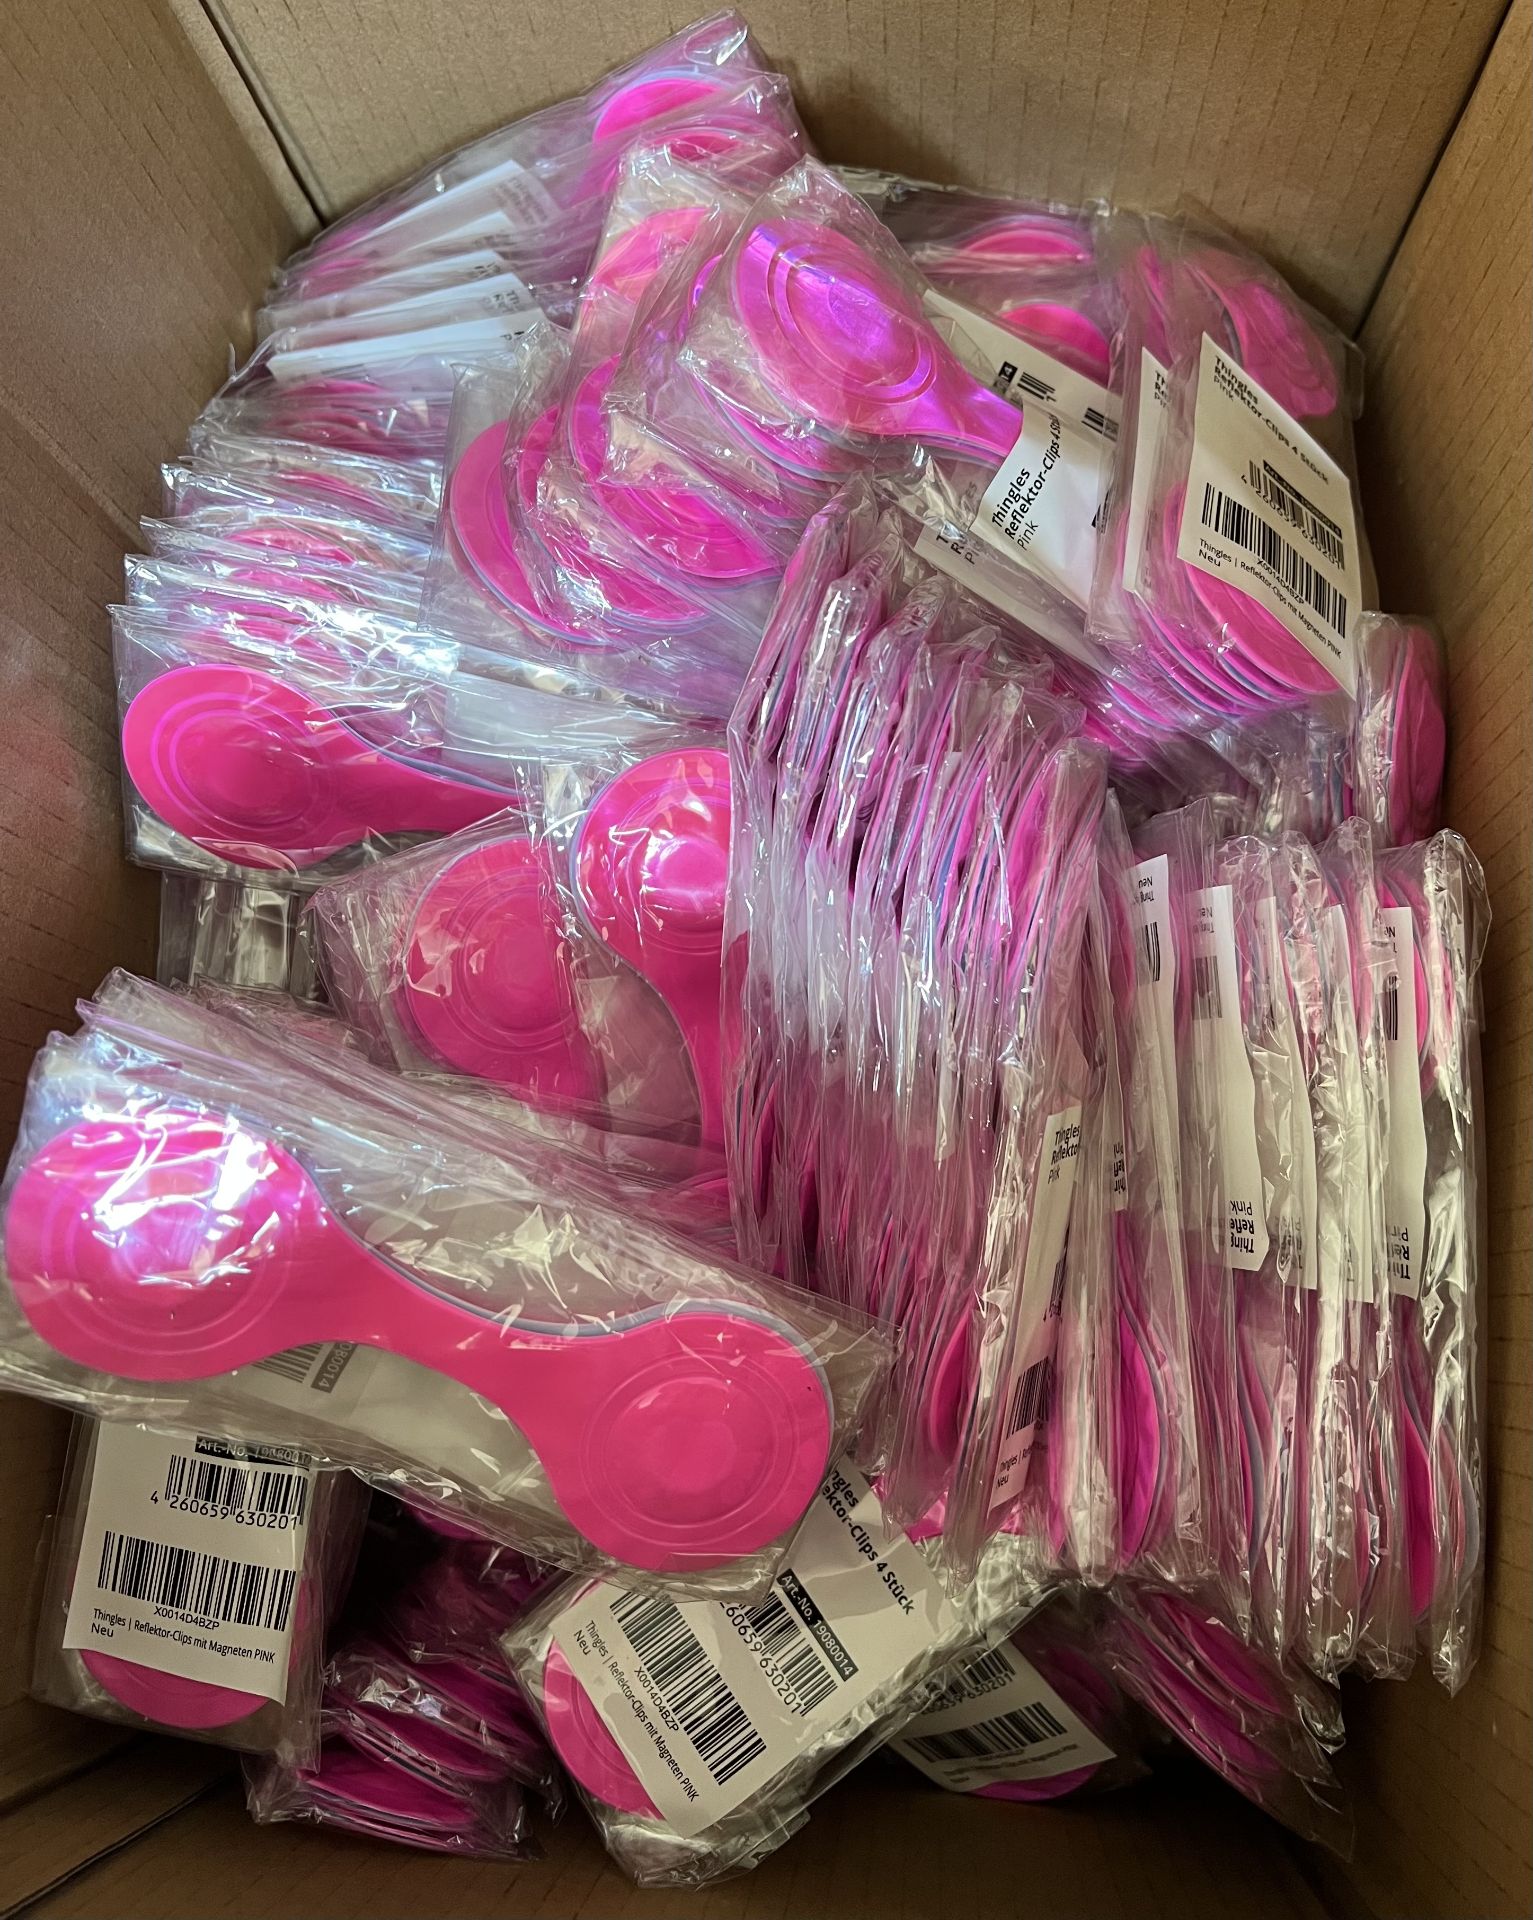 100 x Thingles Pink 4 Pack of Magnetic Reflectors for Children, School Bag, Bike etc - RRP £799!